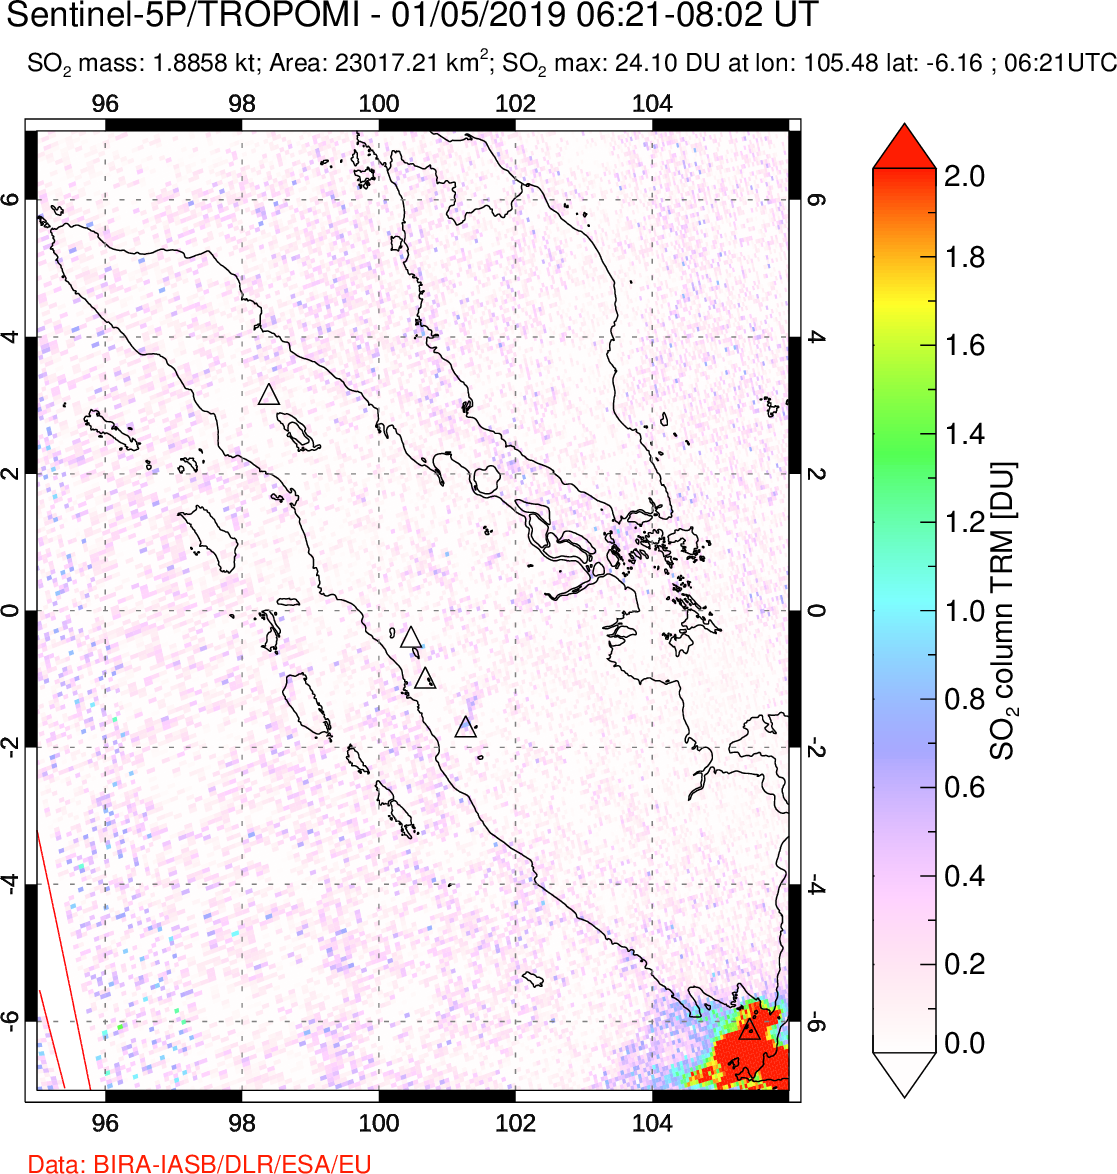 A sulfur dioxide image over Sumatra, Indonesia on Jan 05, 2019.